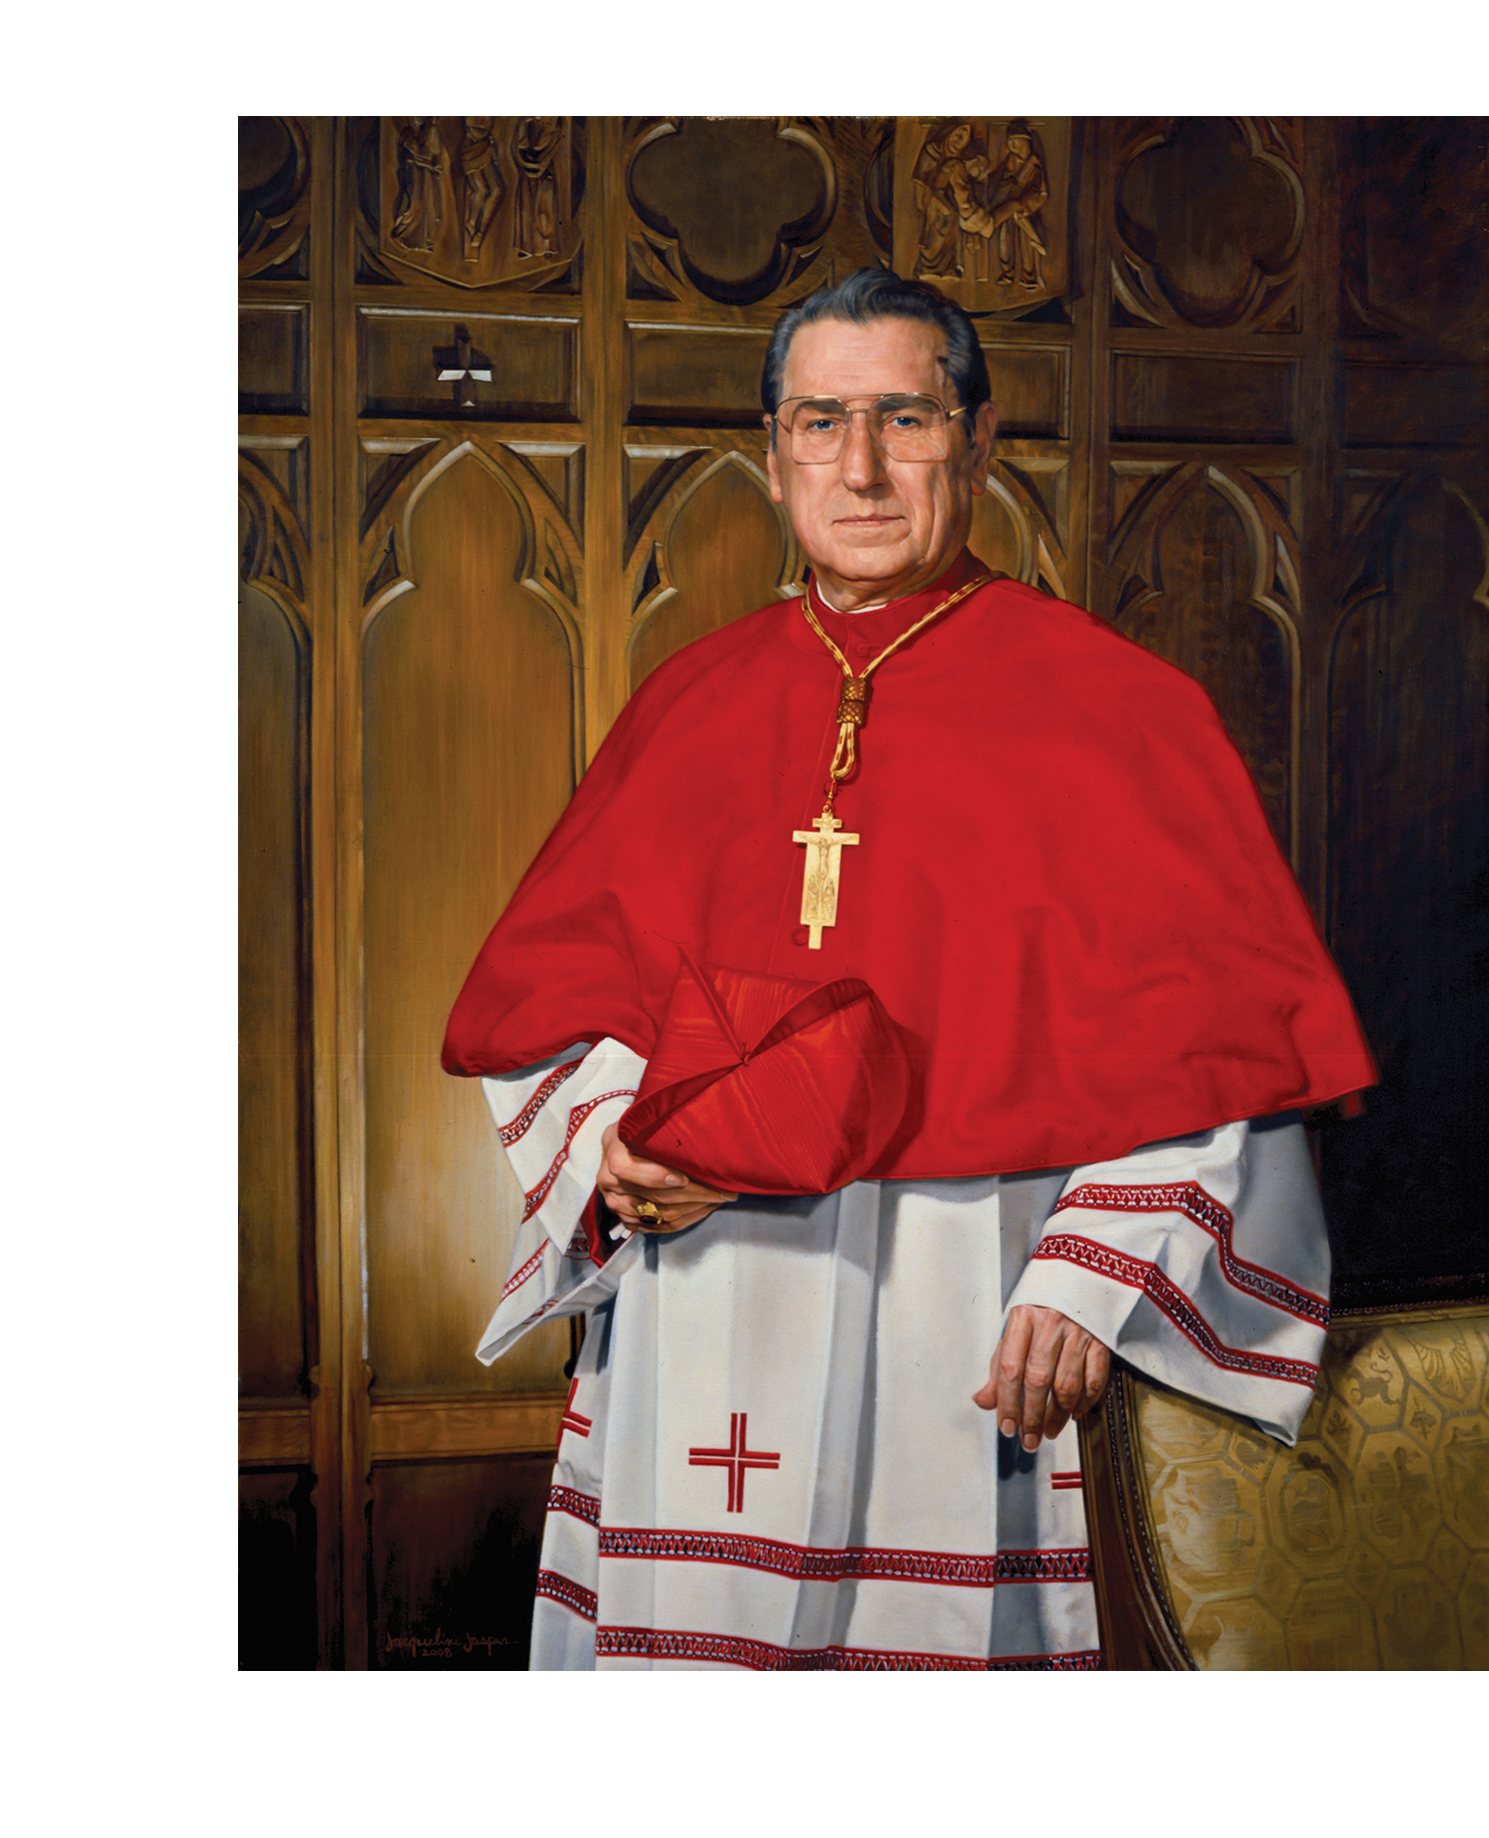 John Cardinal O’Conner, New York Archdiocese